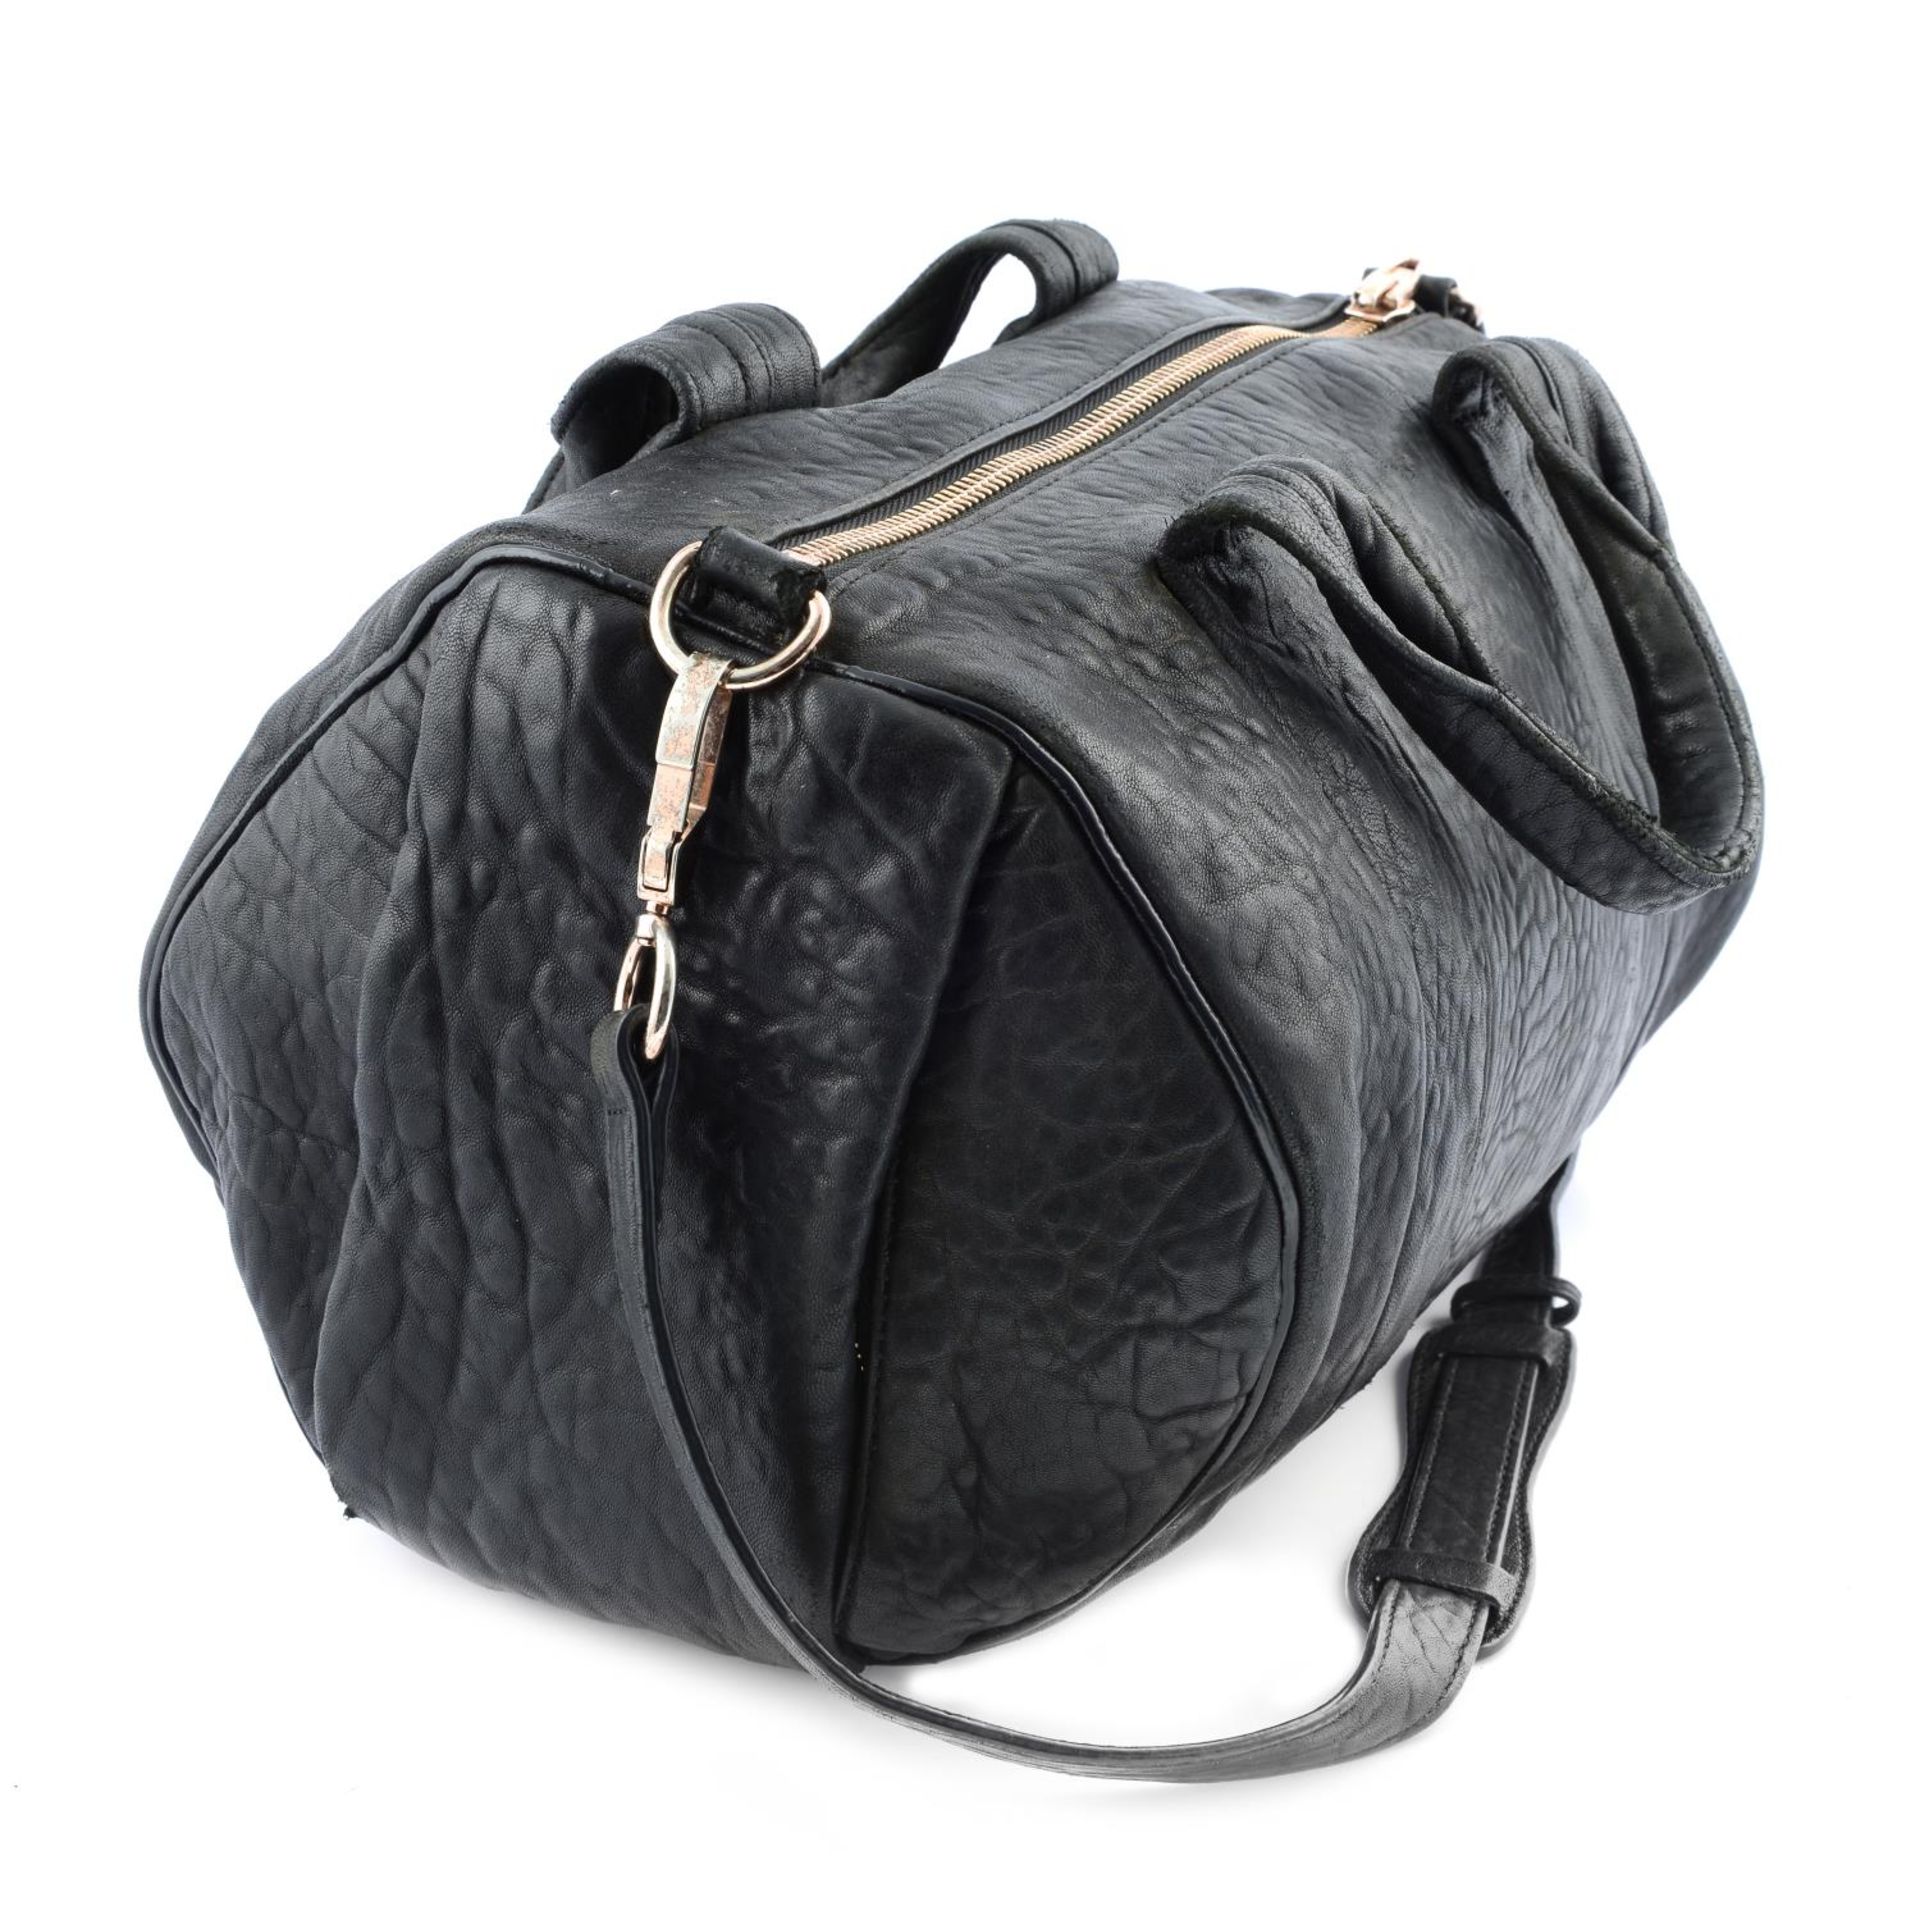 ALEXANDER WANG - a Rocco leather handbag. - Bild 3 aus 7